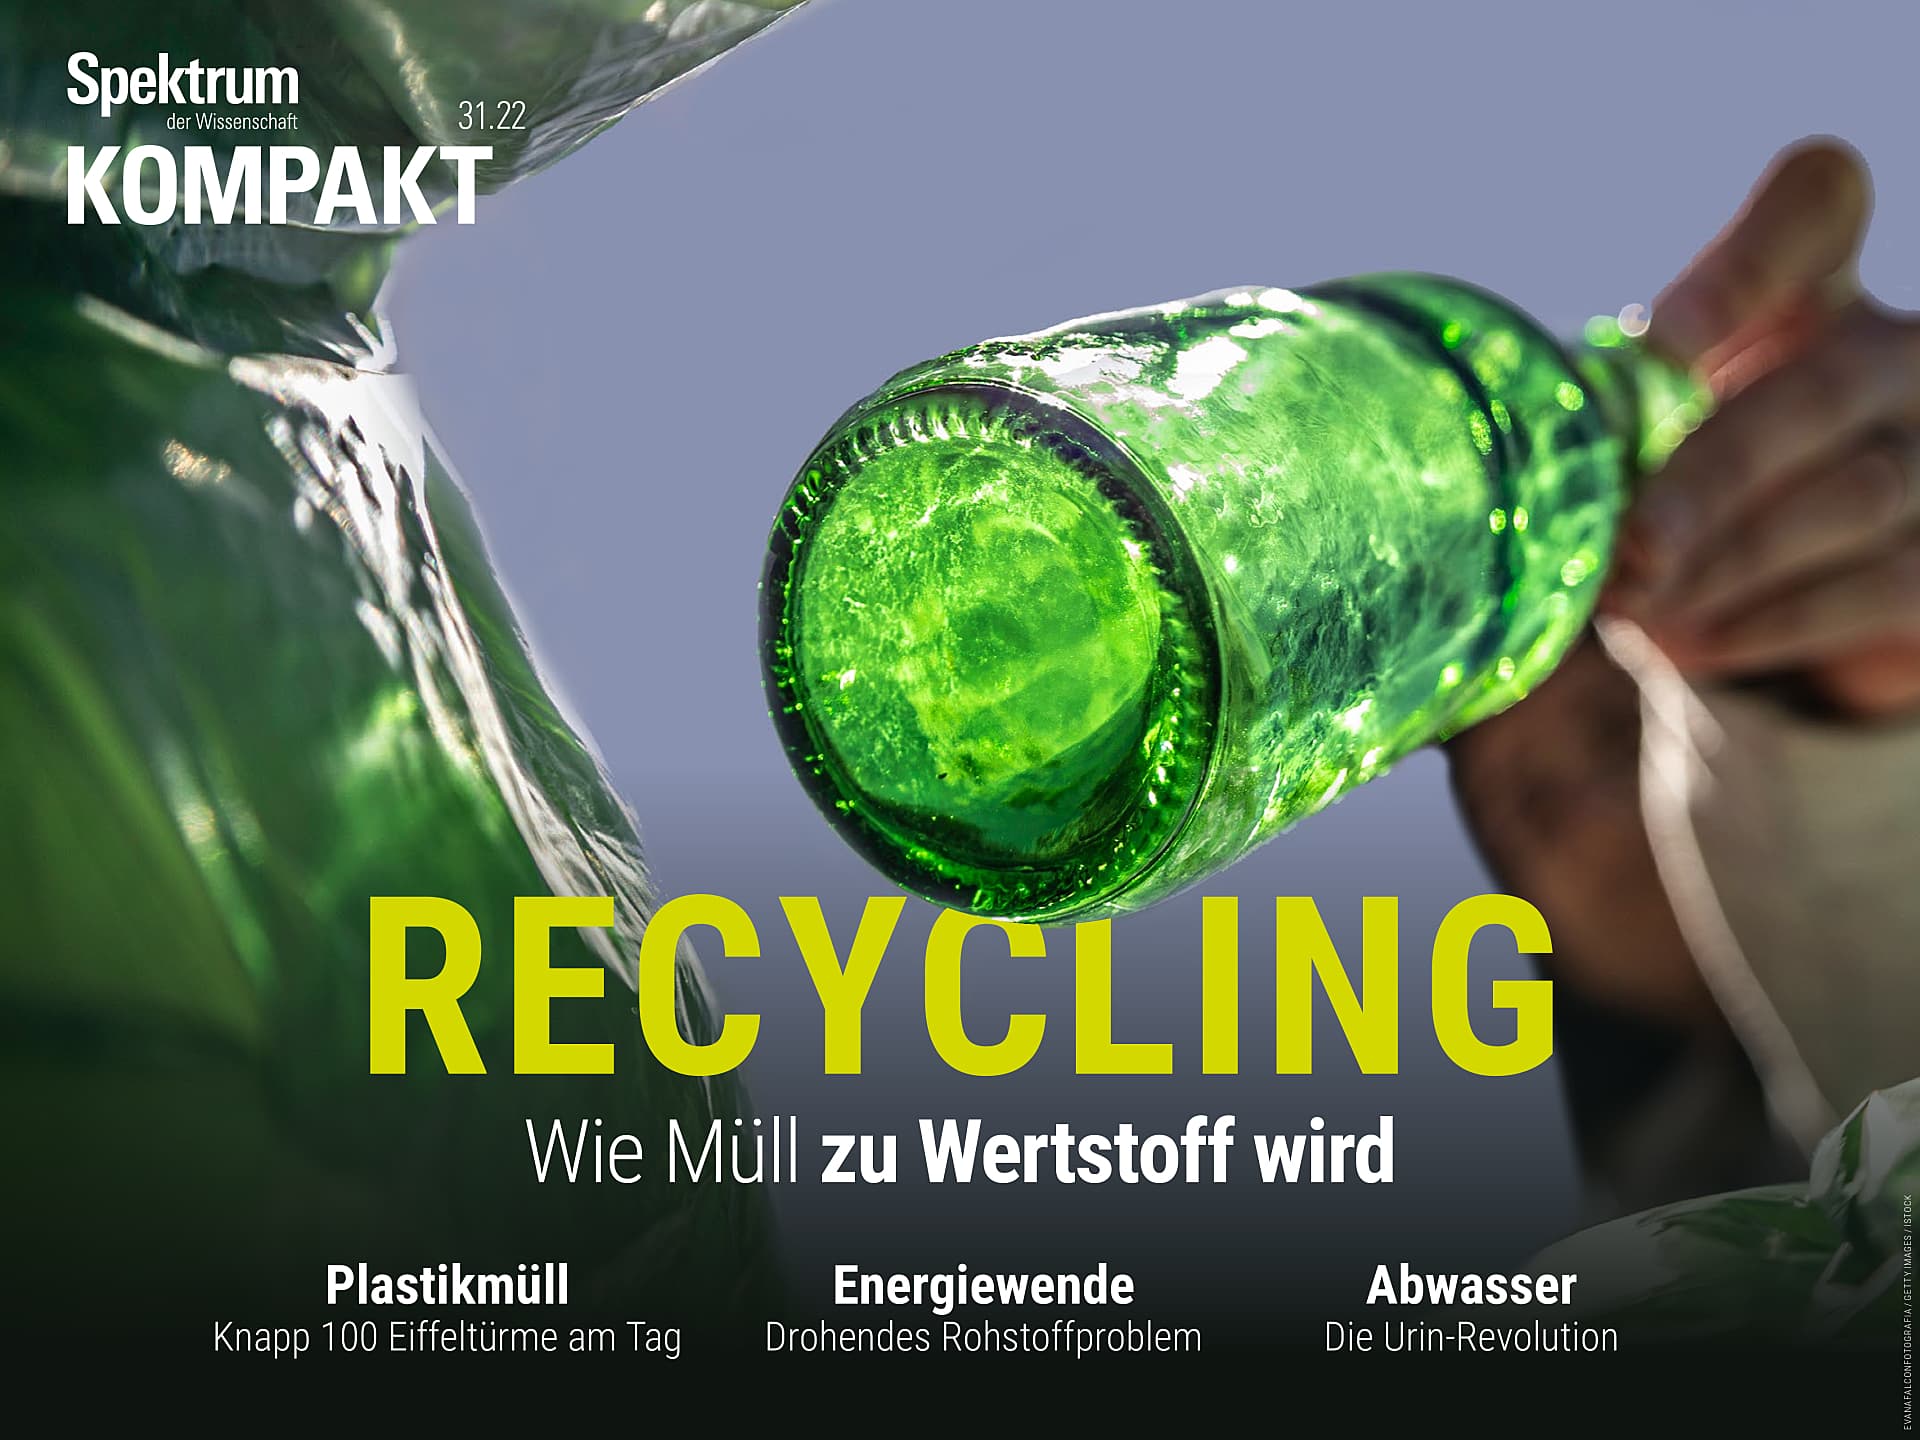 Recycling - Wie Müll zu Wertstoff wird